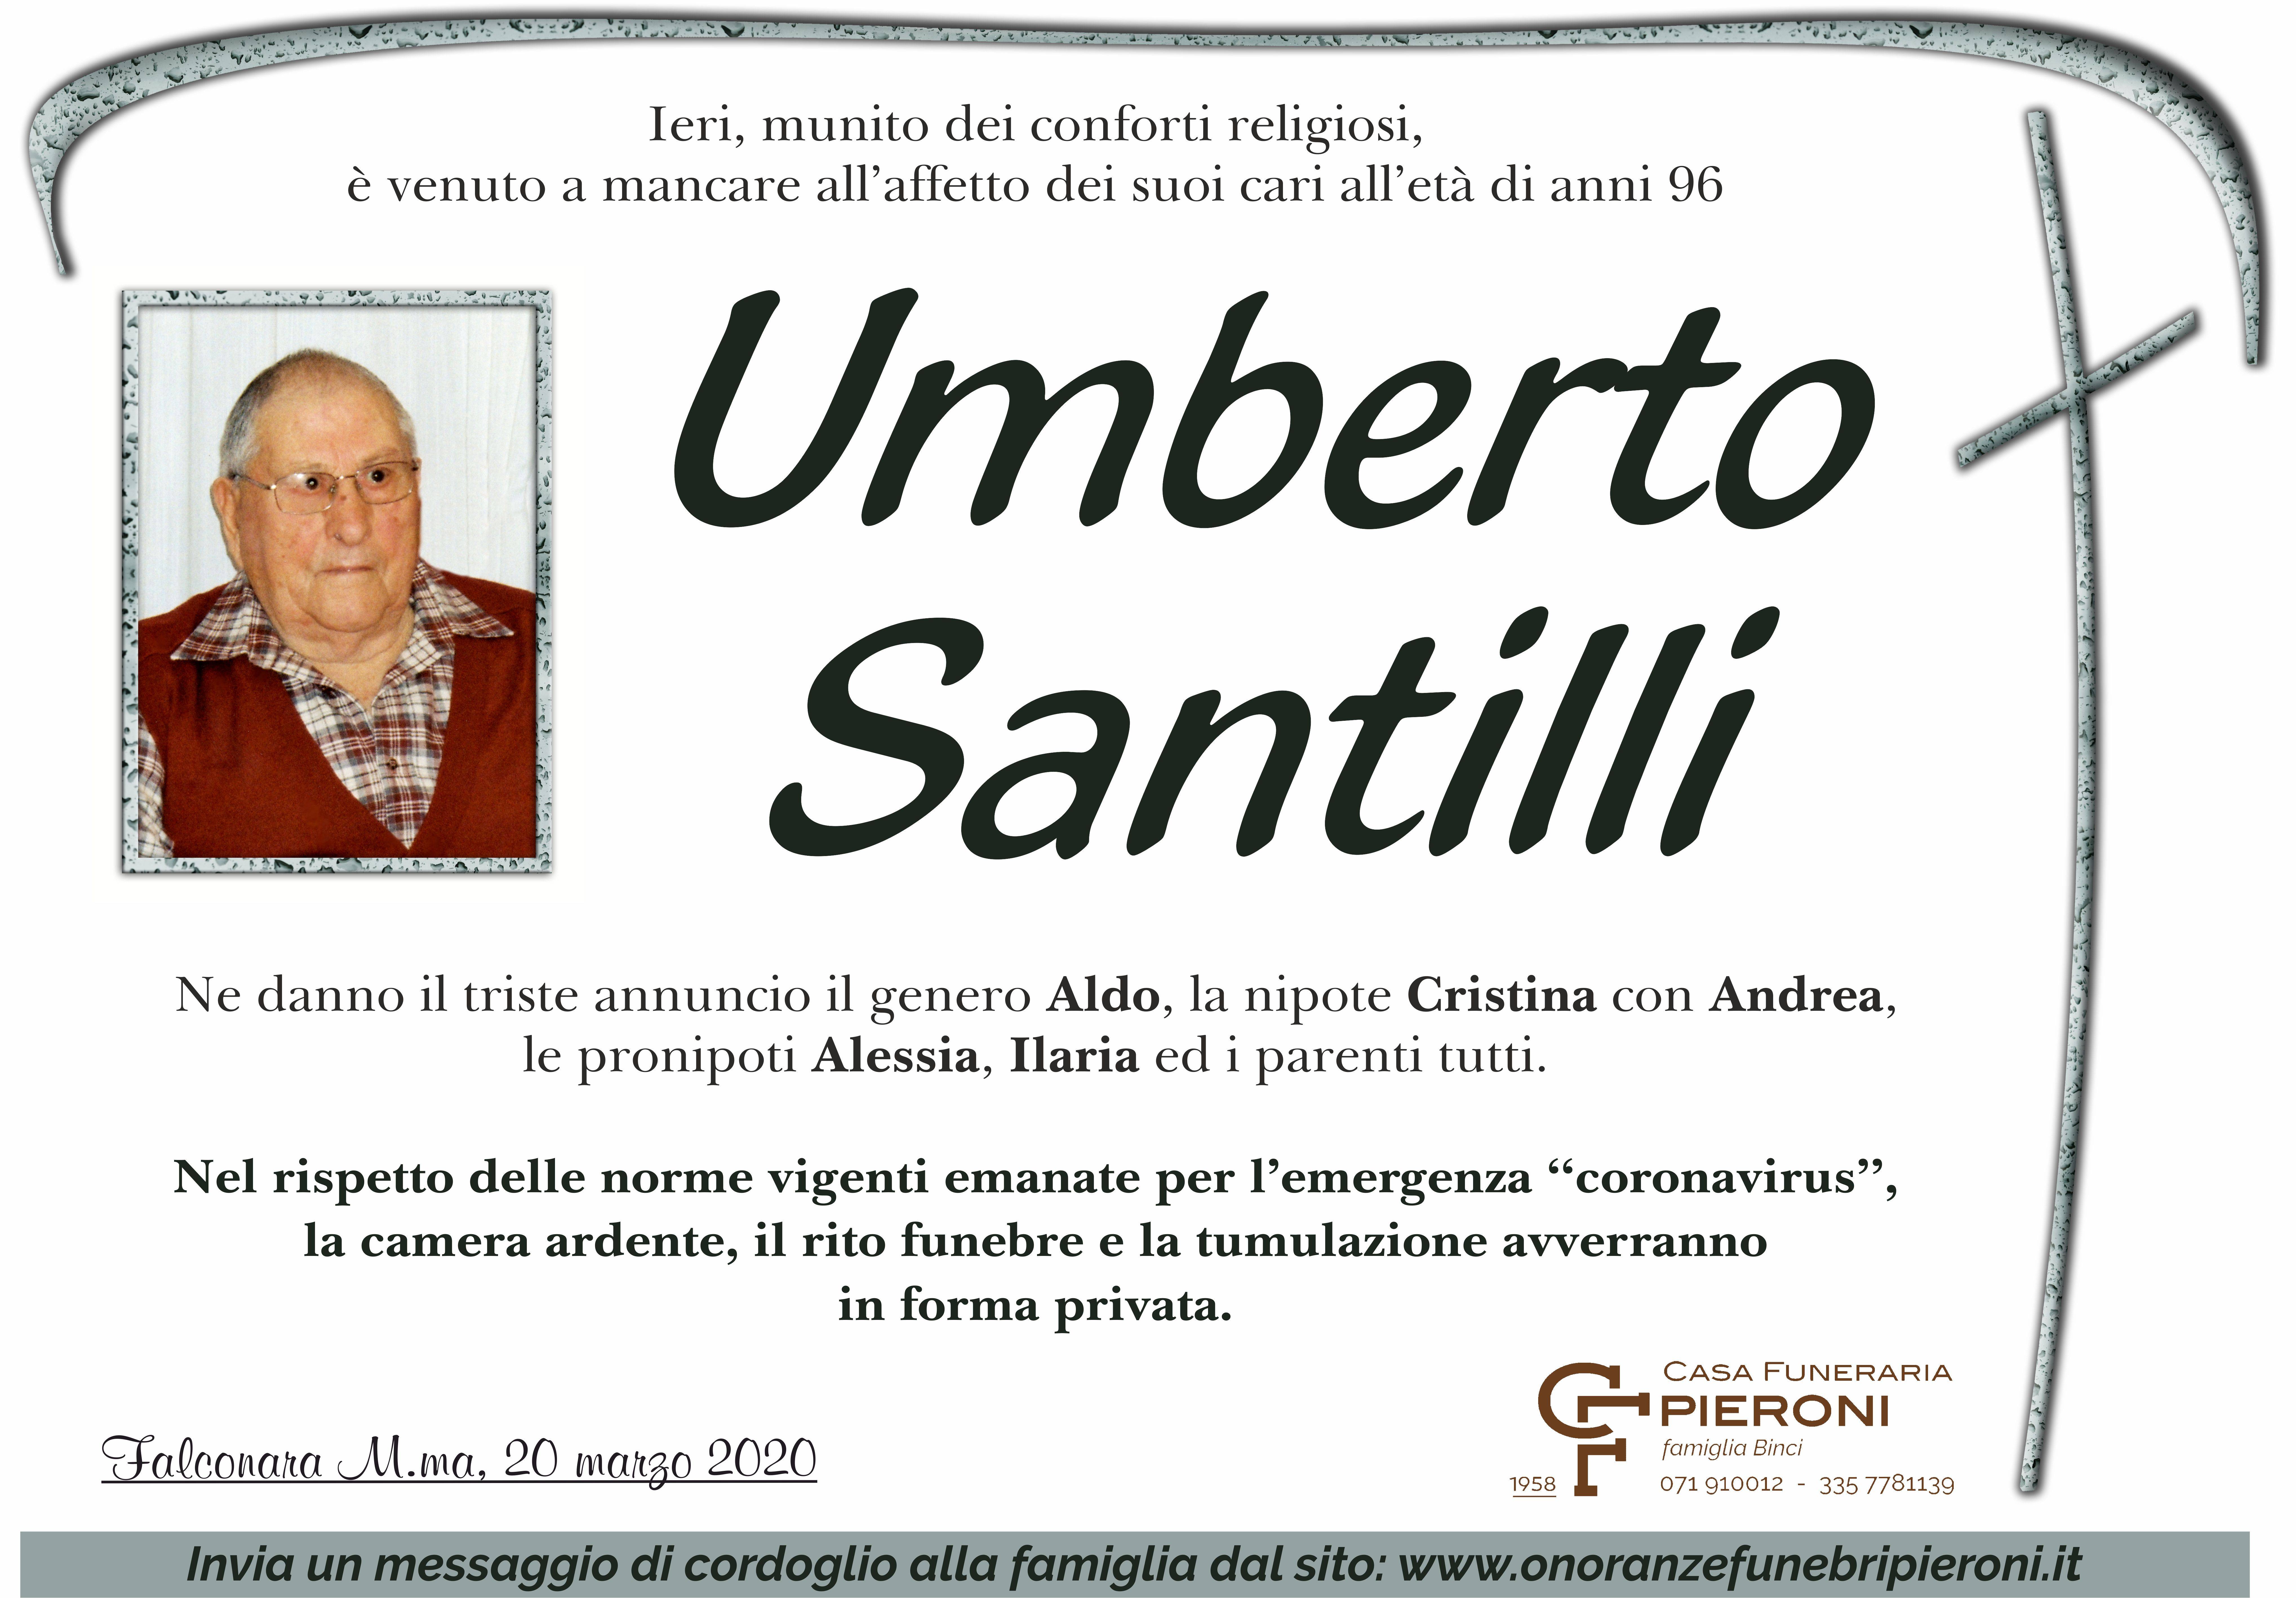 Umberto Santilli